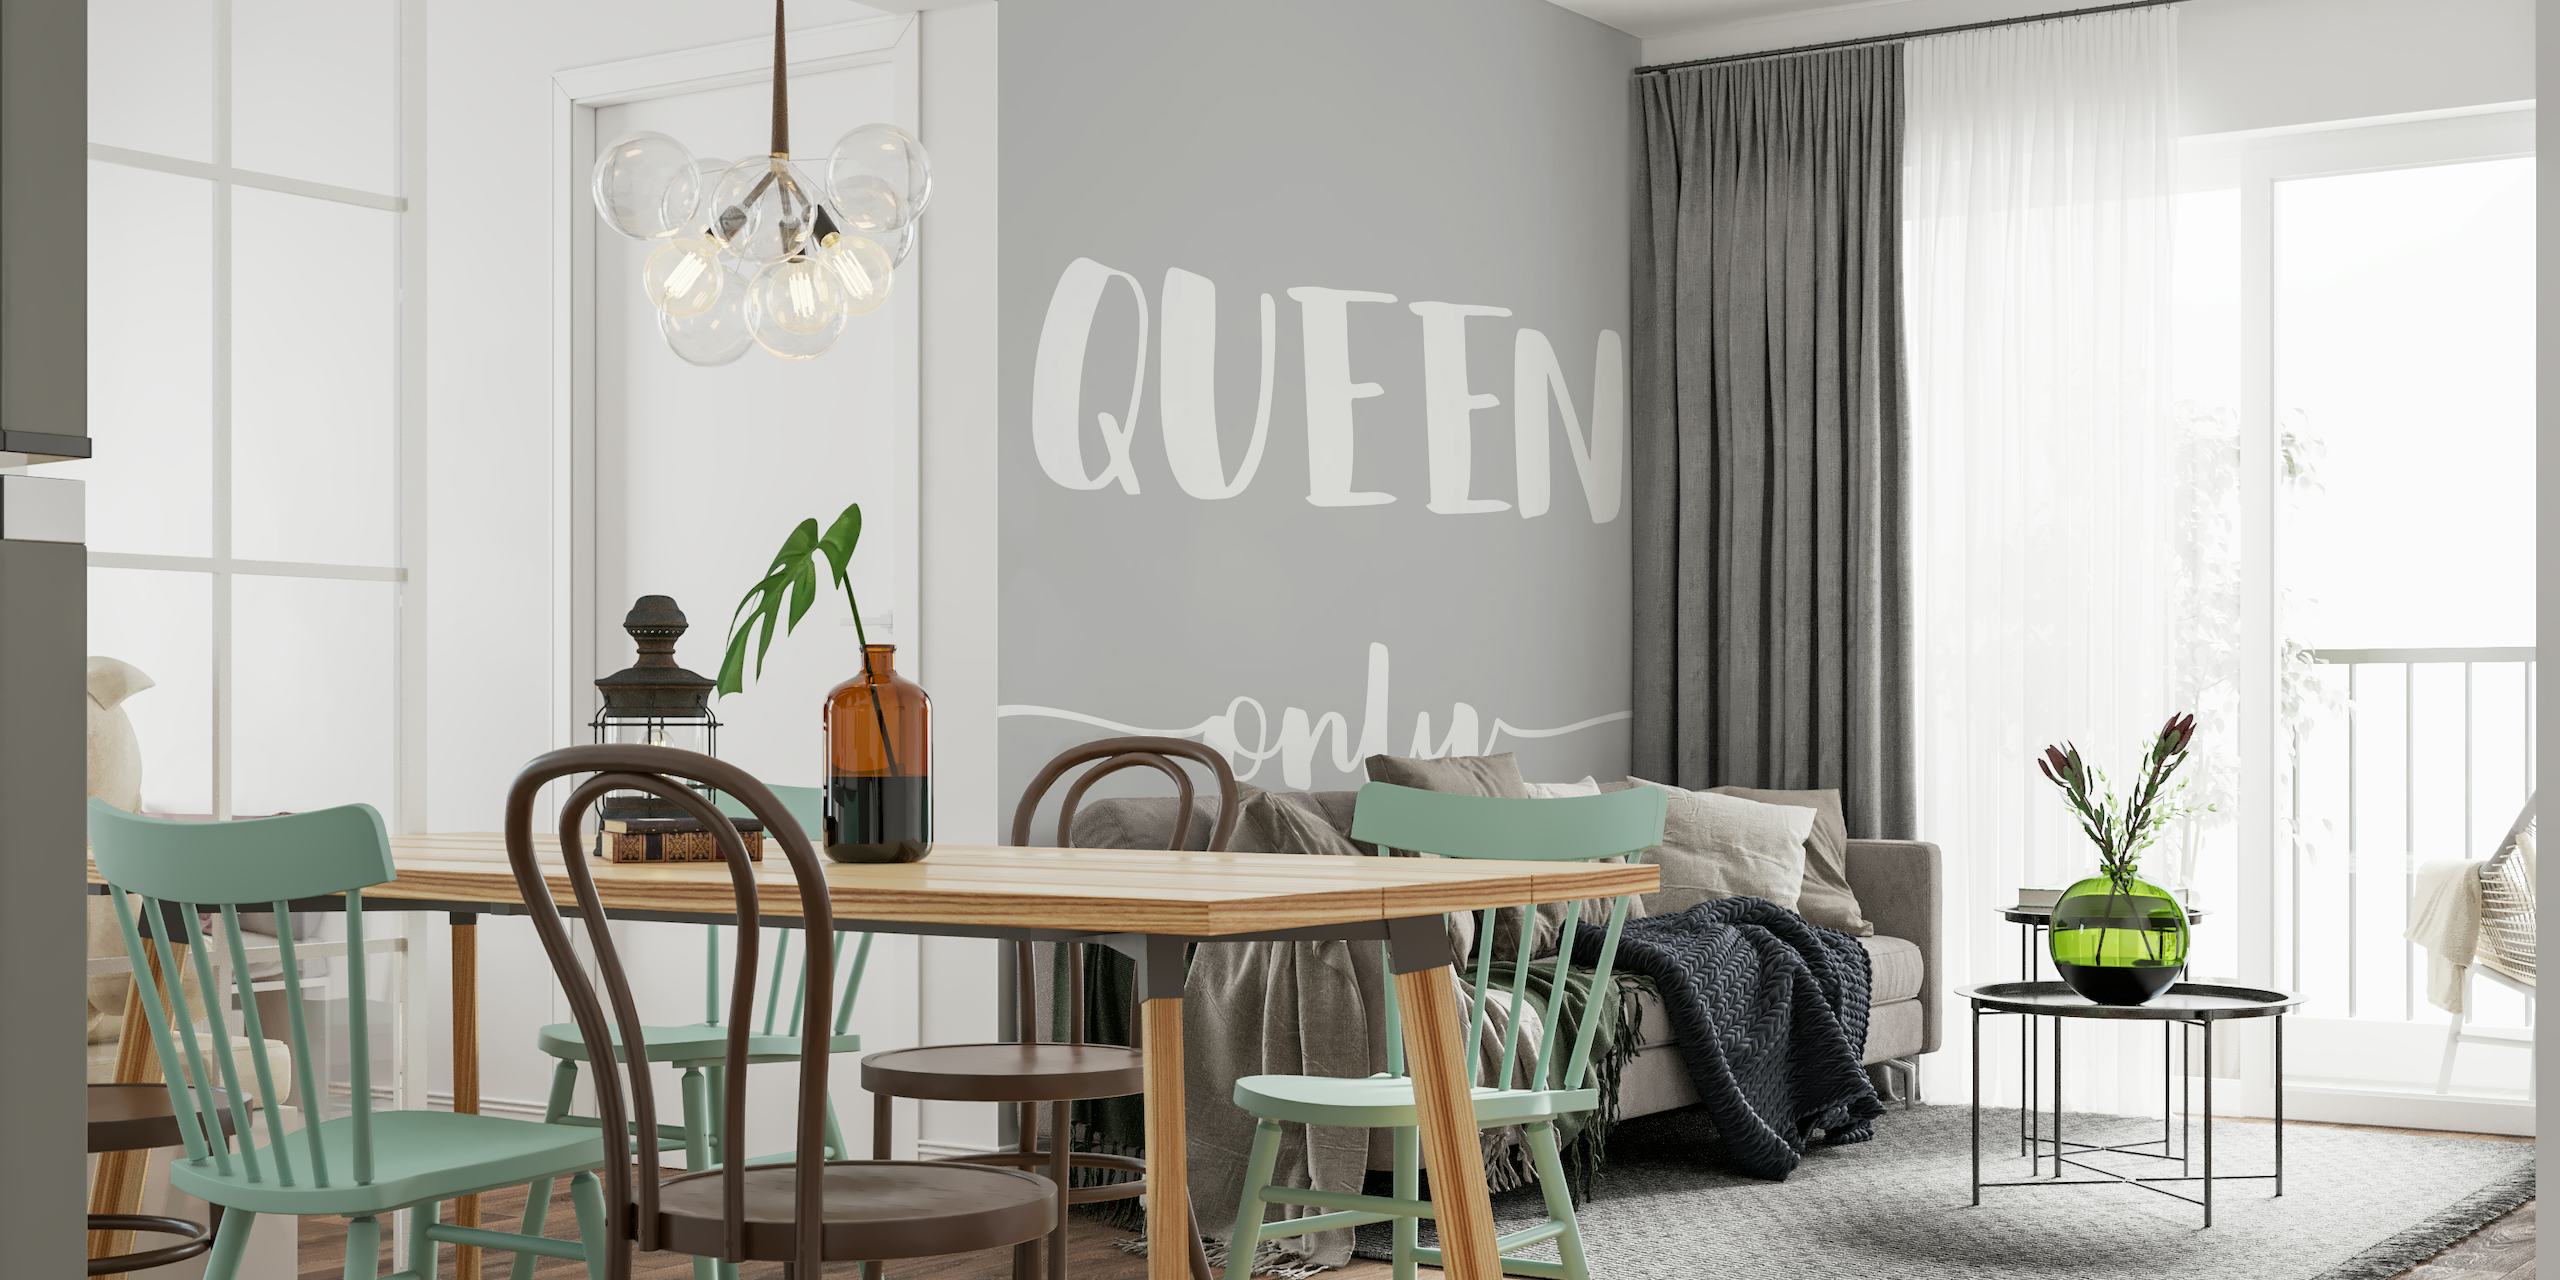 Fotomural minimalista com texto 'Queen Only' em cinza e branco